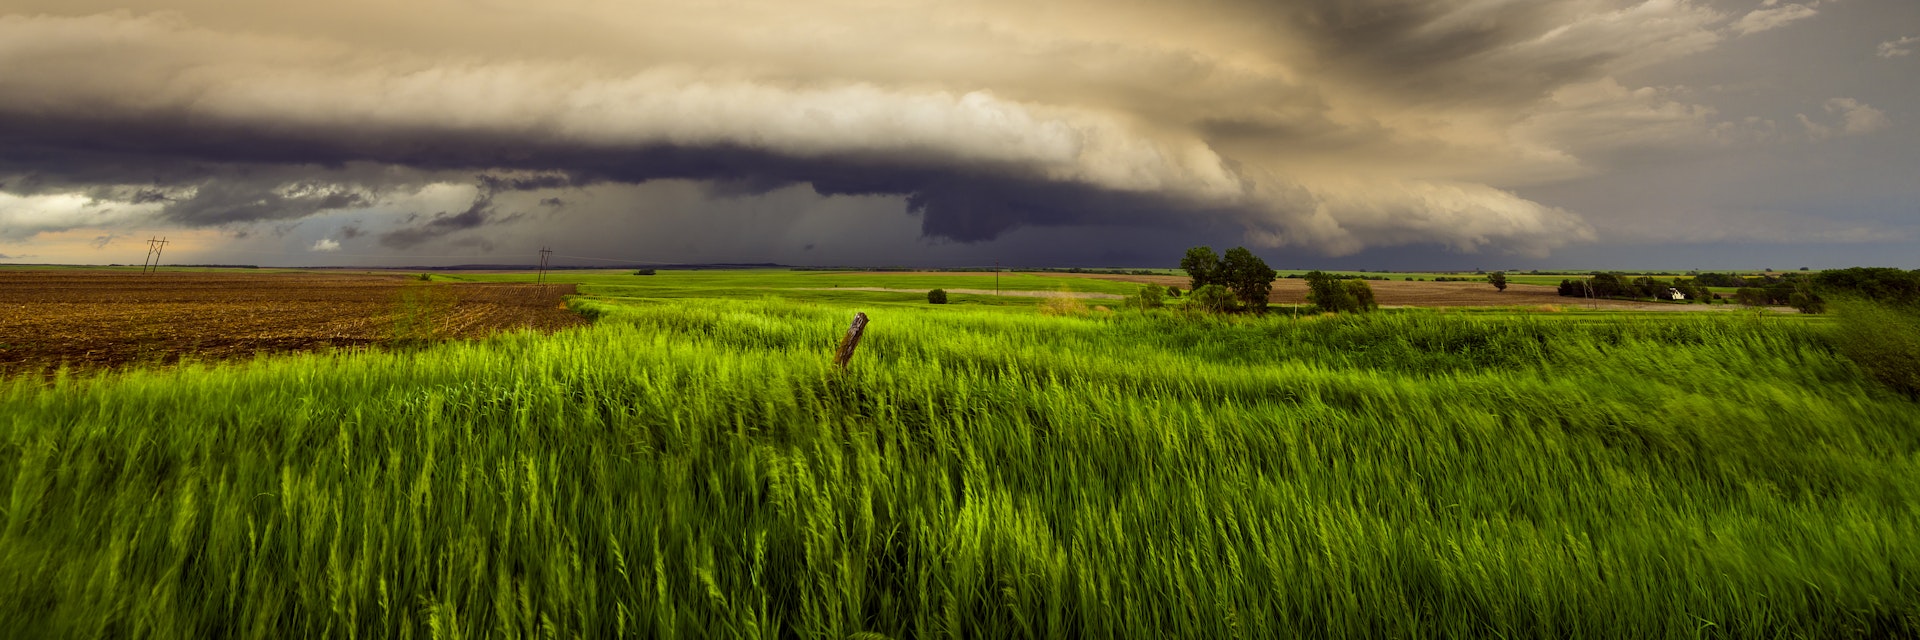 Tornadic storm ride cloud, Kansas